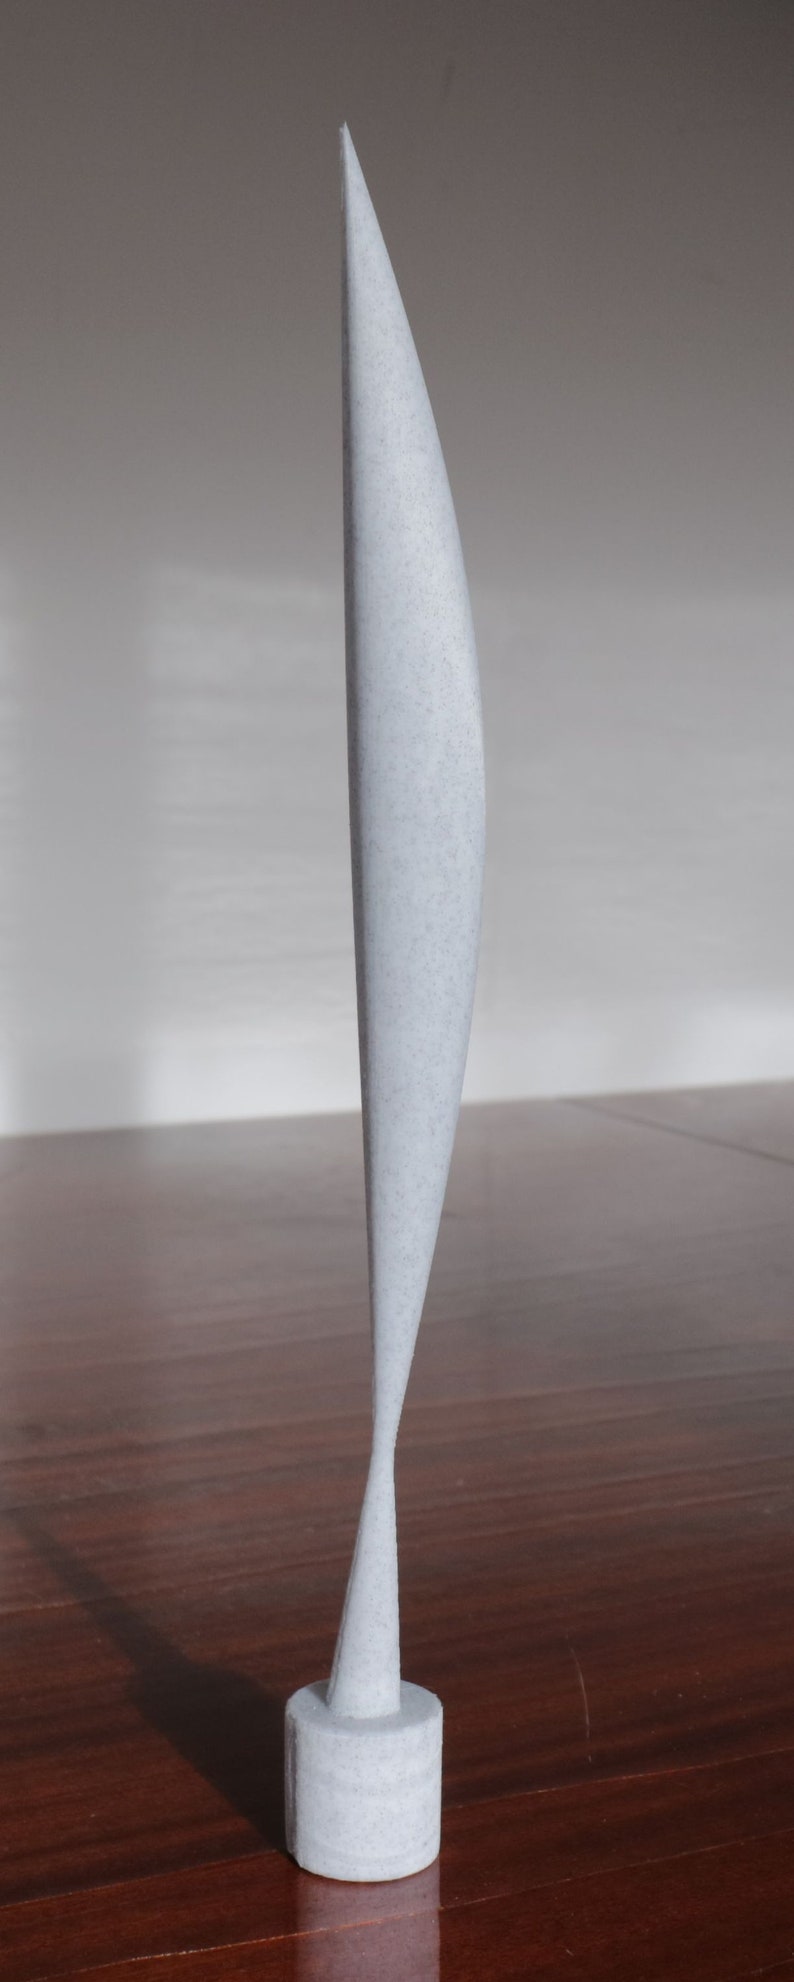 Reproduction imprimée en 3D de la sculpture Bird in Space de Constantin Brancusi image 5